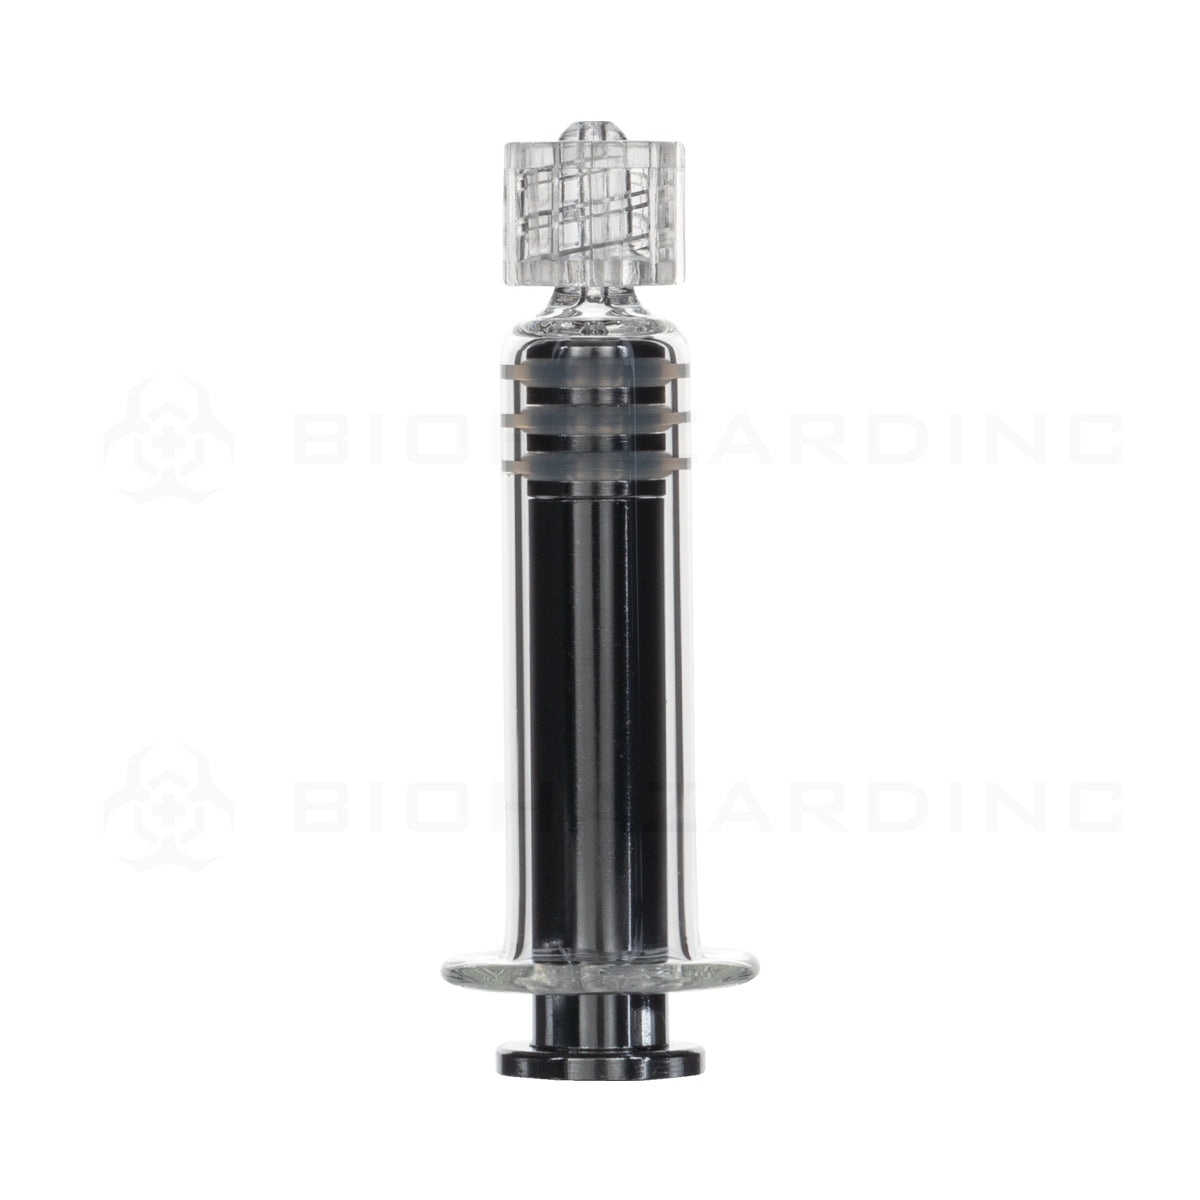 Luer Lock | Concentrate Glass Syringe w/ Metal Plunger | 1mL - 100 Count Syringe Biohazard Inc   